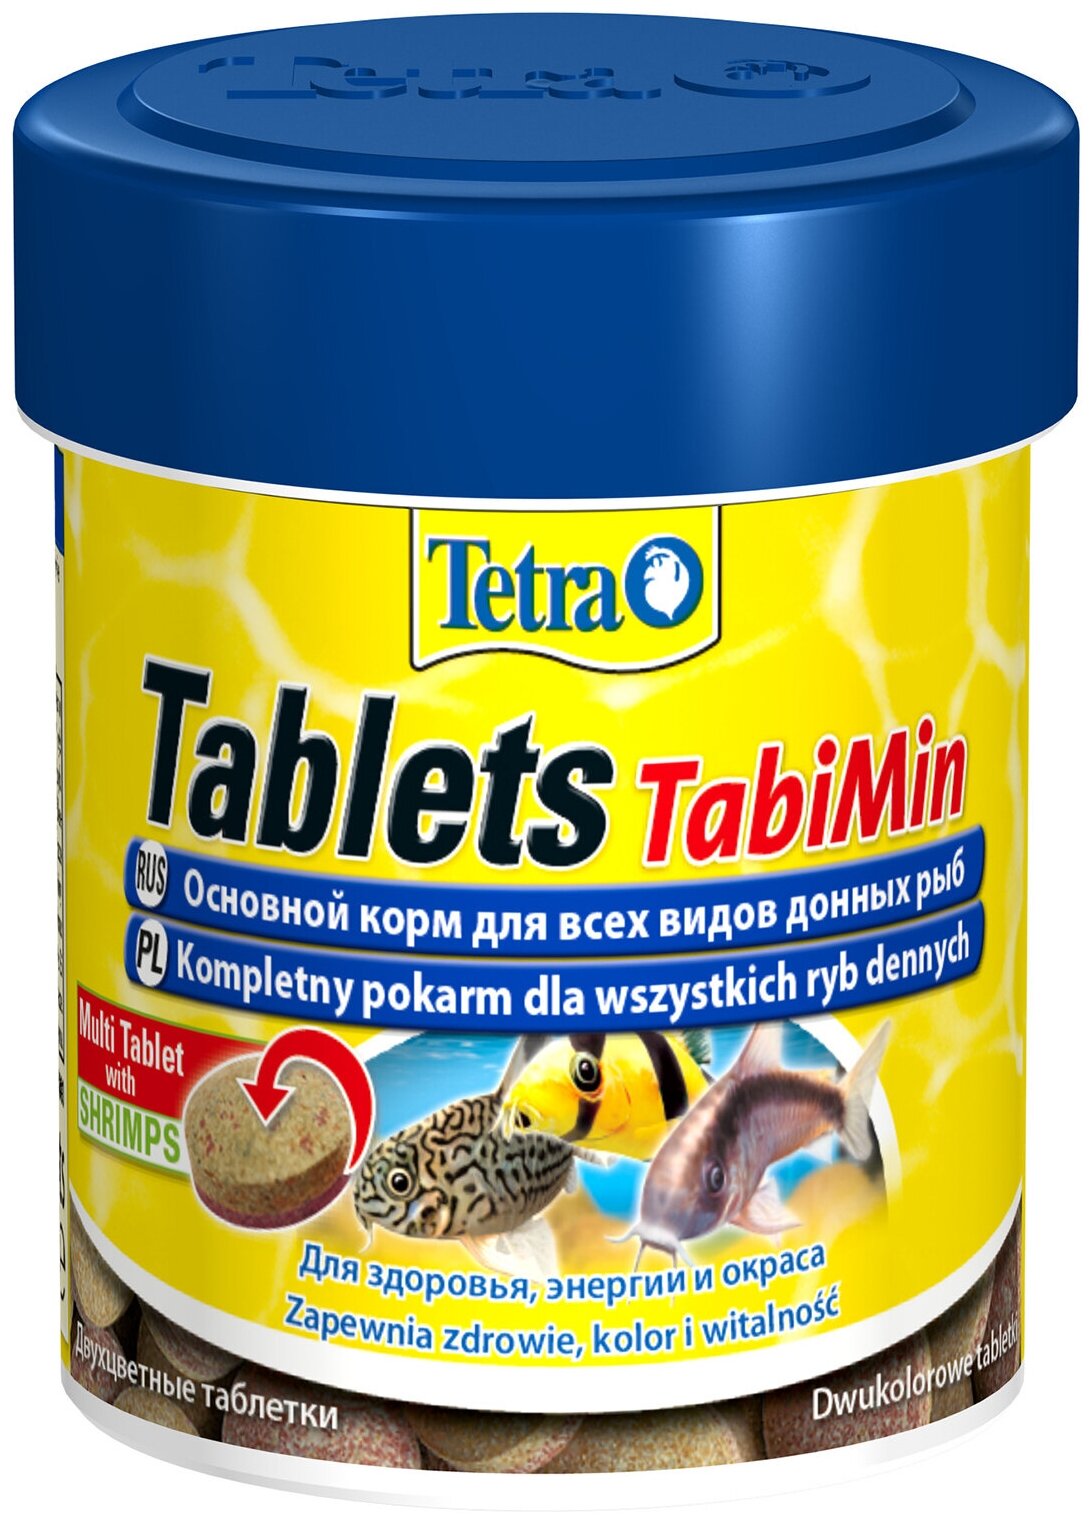 Корм для аквариумных рыб Tetra Tablets TabiMin 120 табл. - фотография № 5